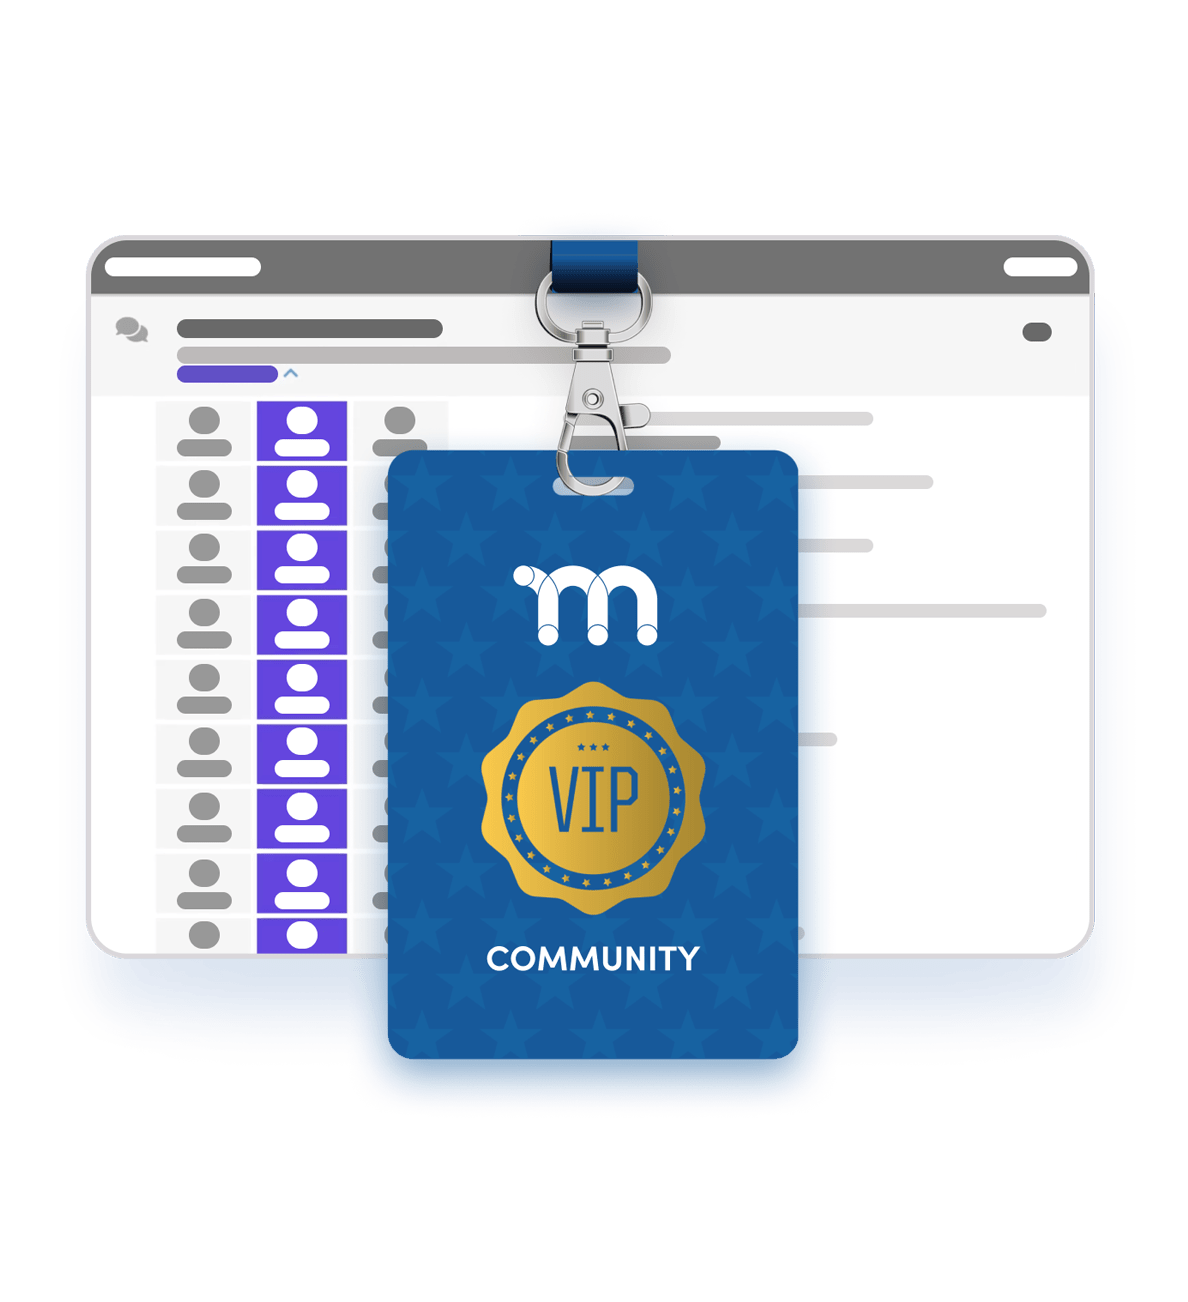 MemberPress VIP community badge